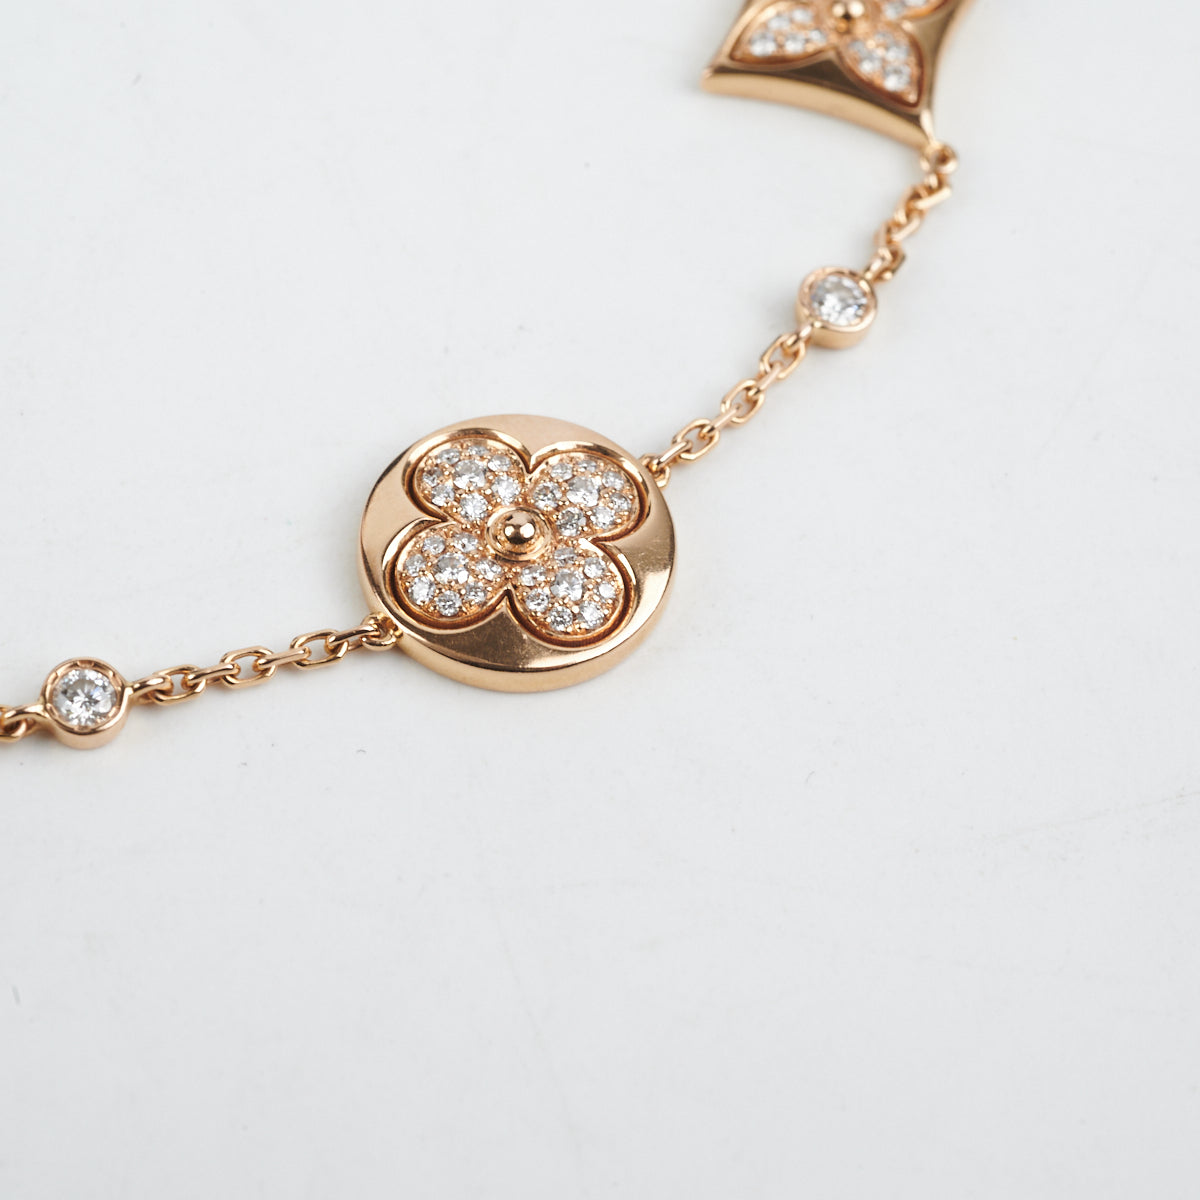 Blossom pink gold bracelet Louis Vuitton Ecru in Pink gold - 20264748